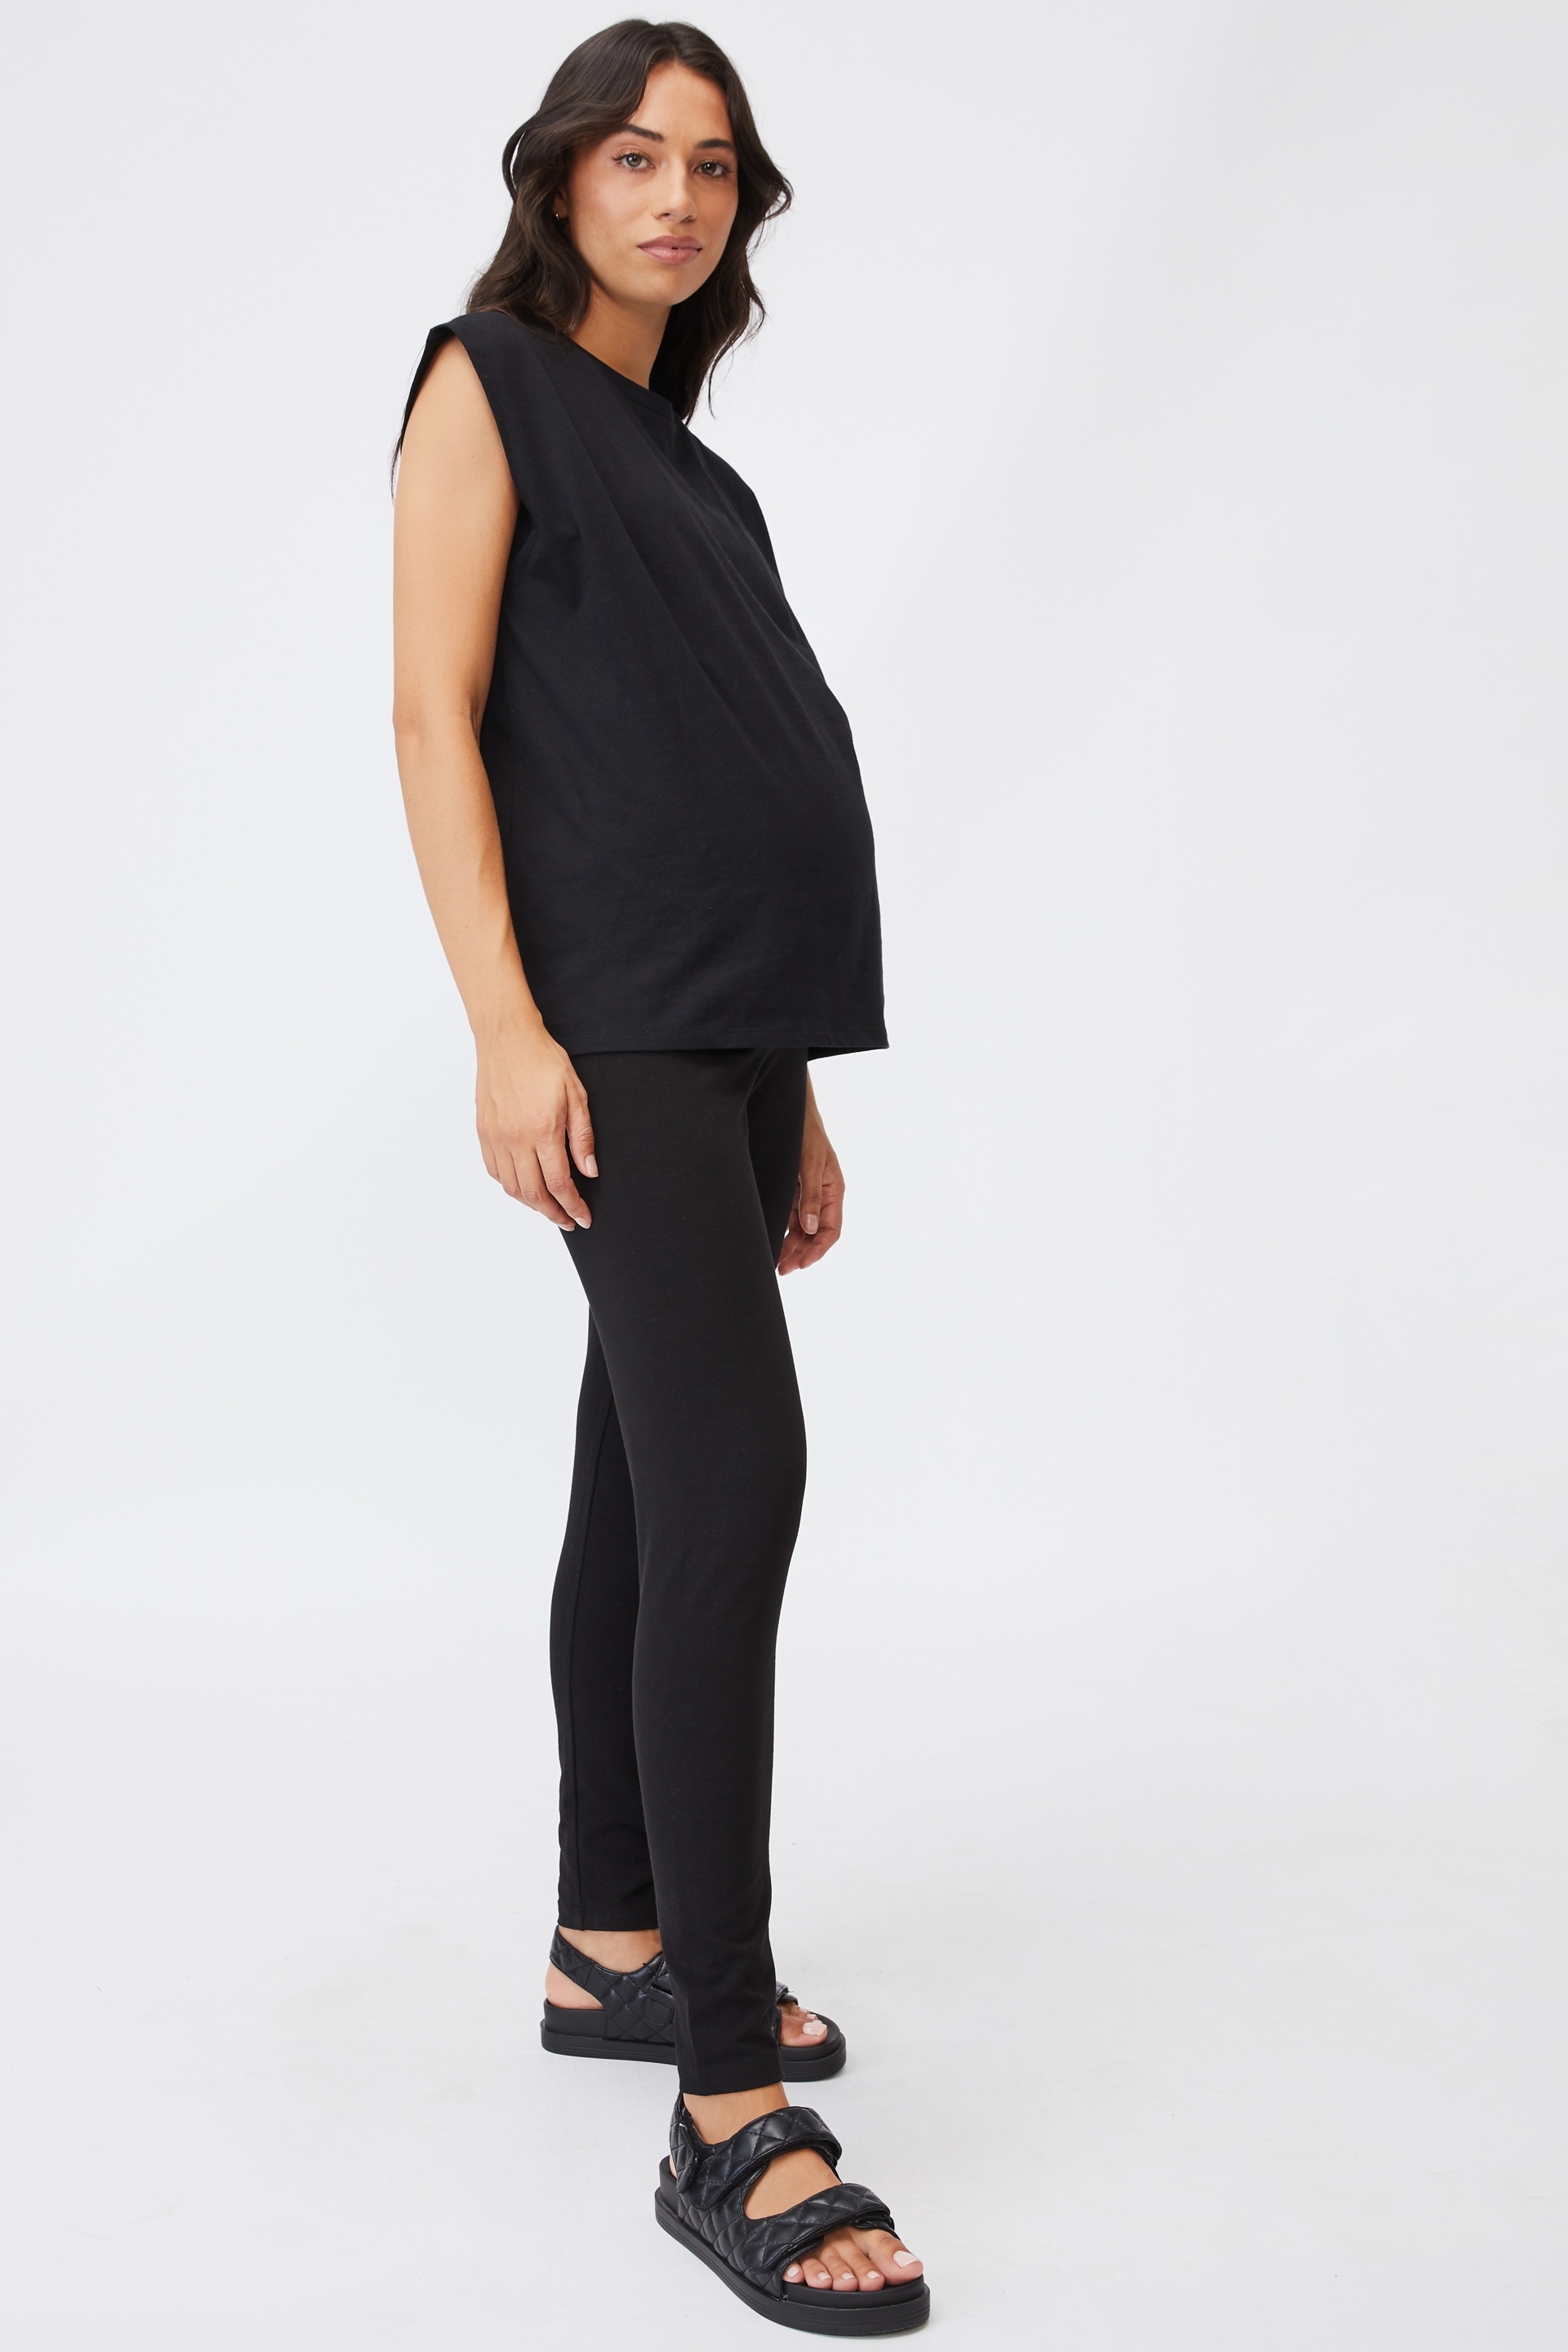 Cotton On Women - Maternity Jersey Legging - Black